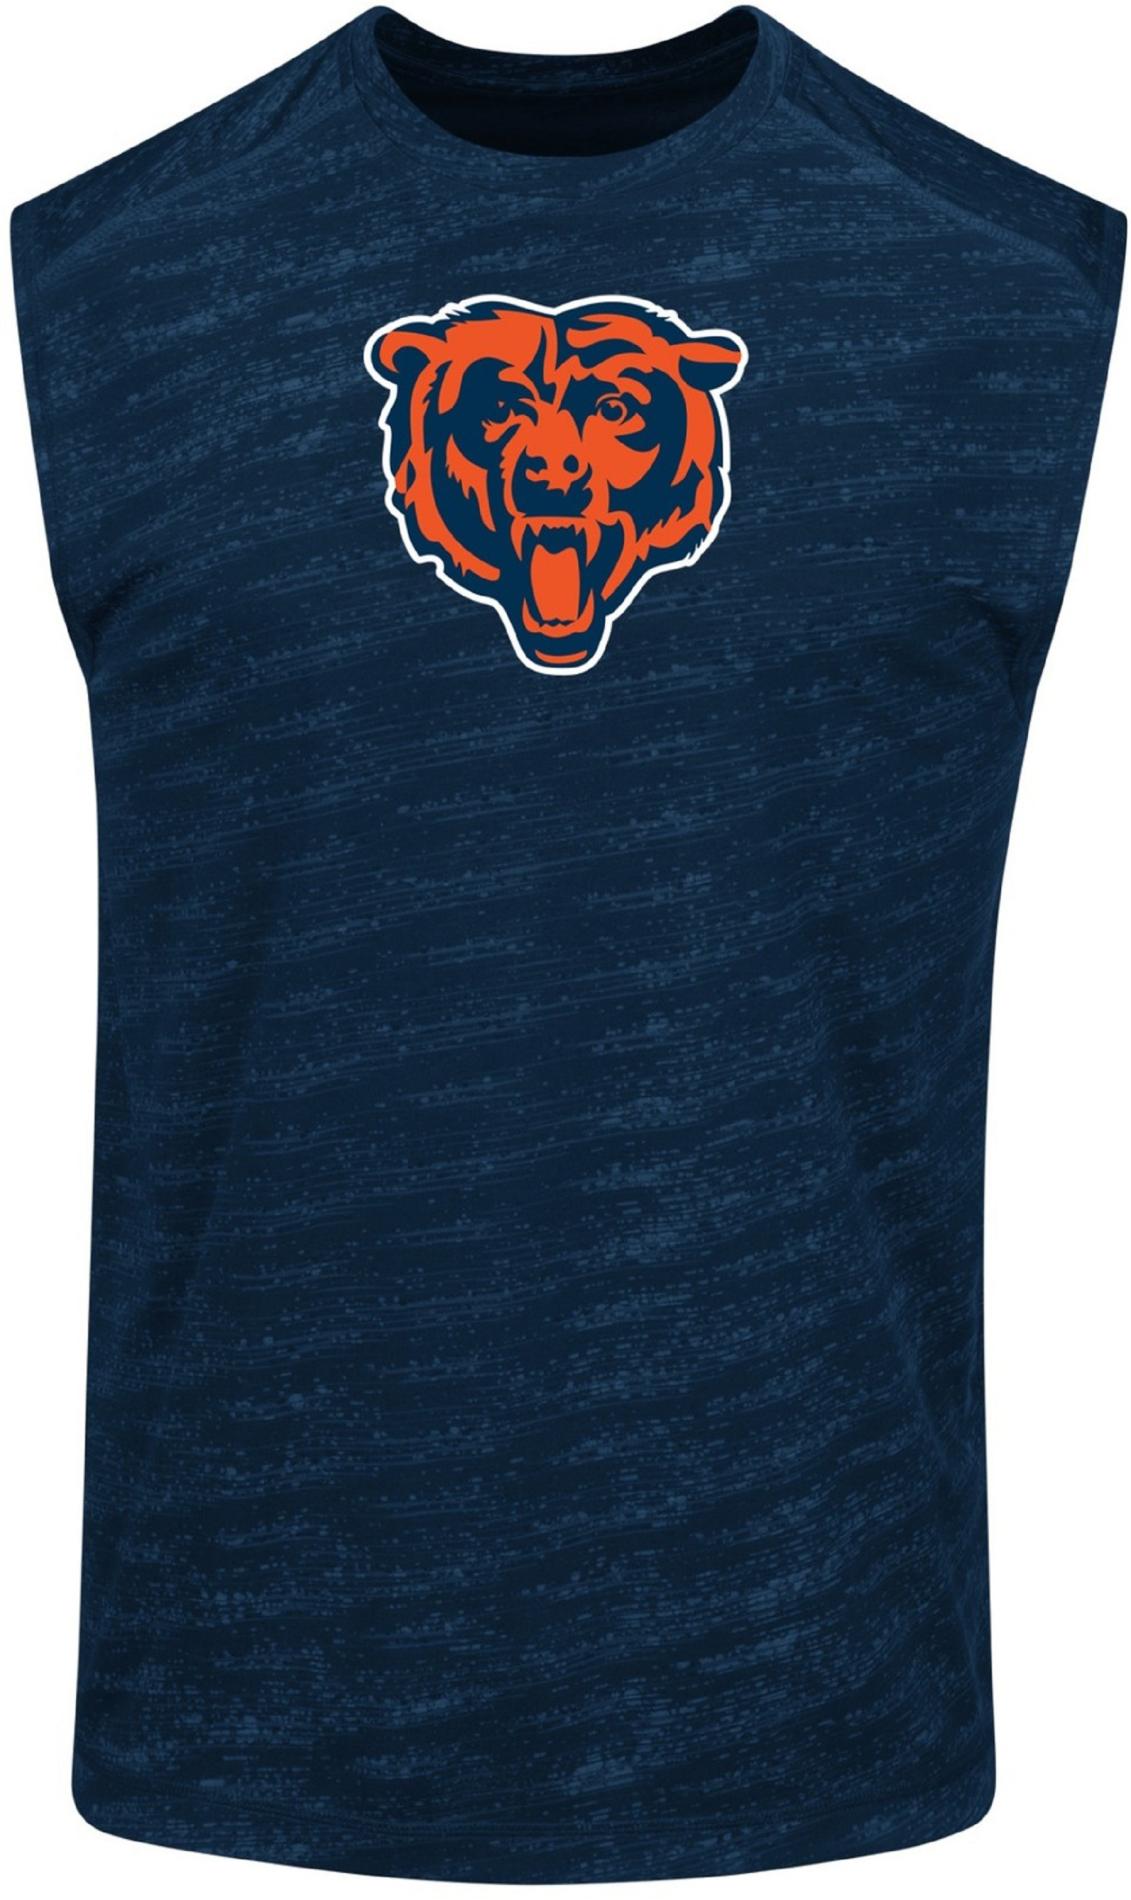 NFL Men's Muscle T-Shirt - Chicago Bears